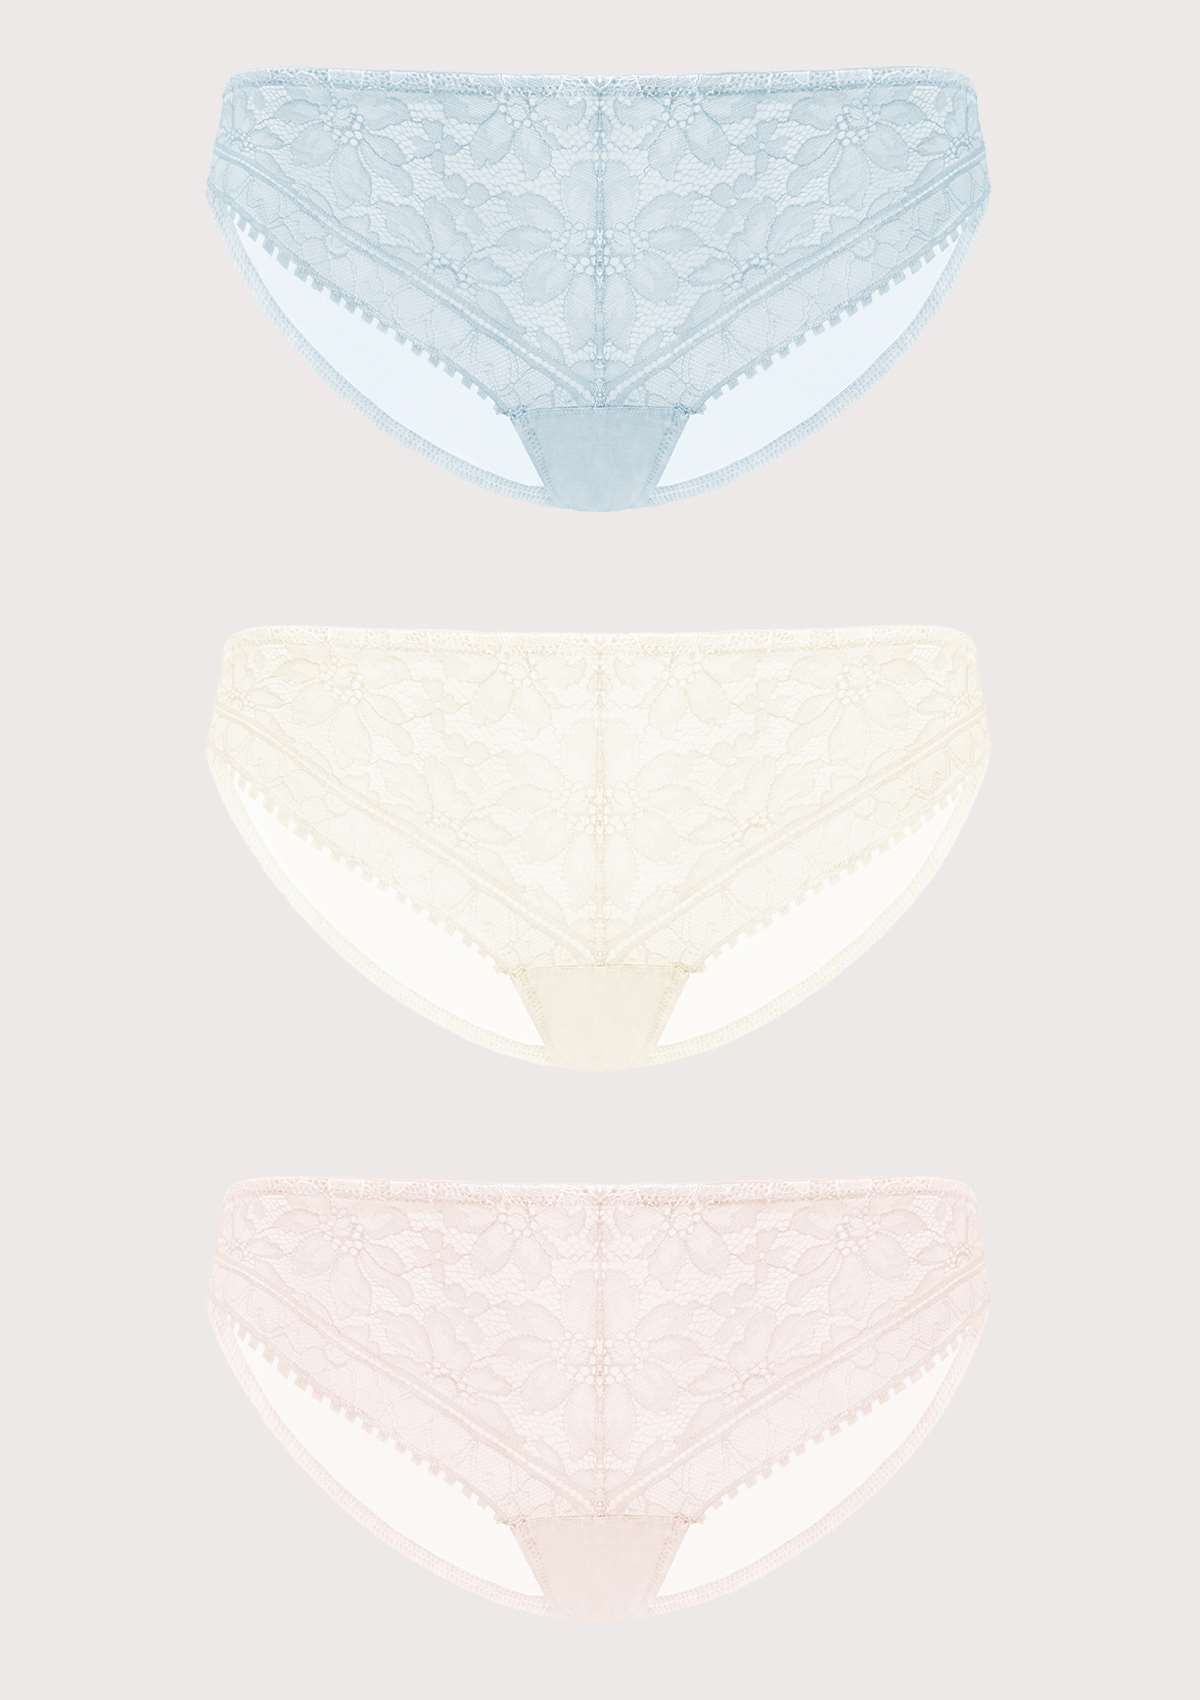 HSIA Silene Sheer Lace Mesh Hipster Underwear 3 Pack - XXL / Light Blue+Champagne+Light Pink